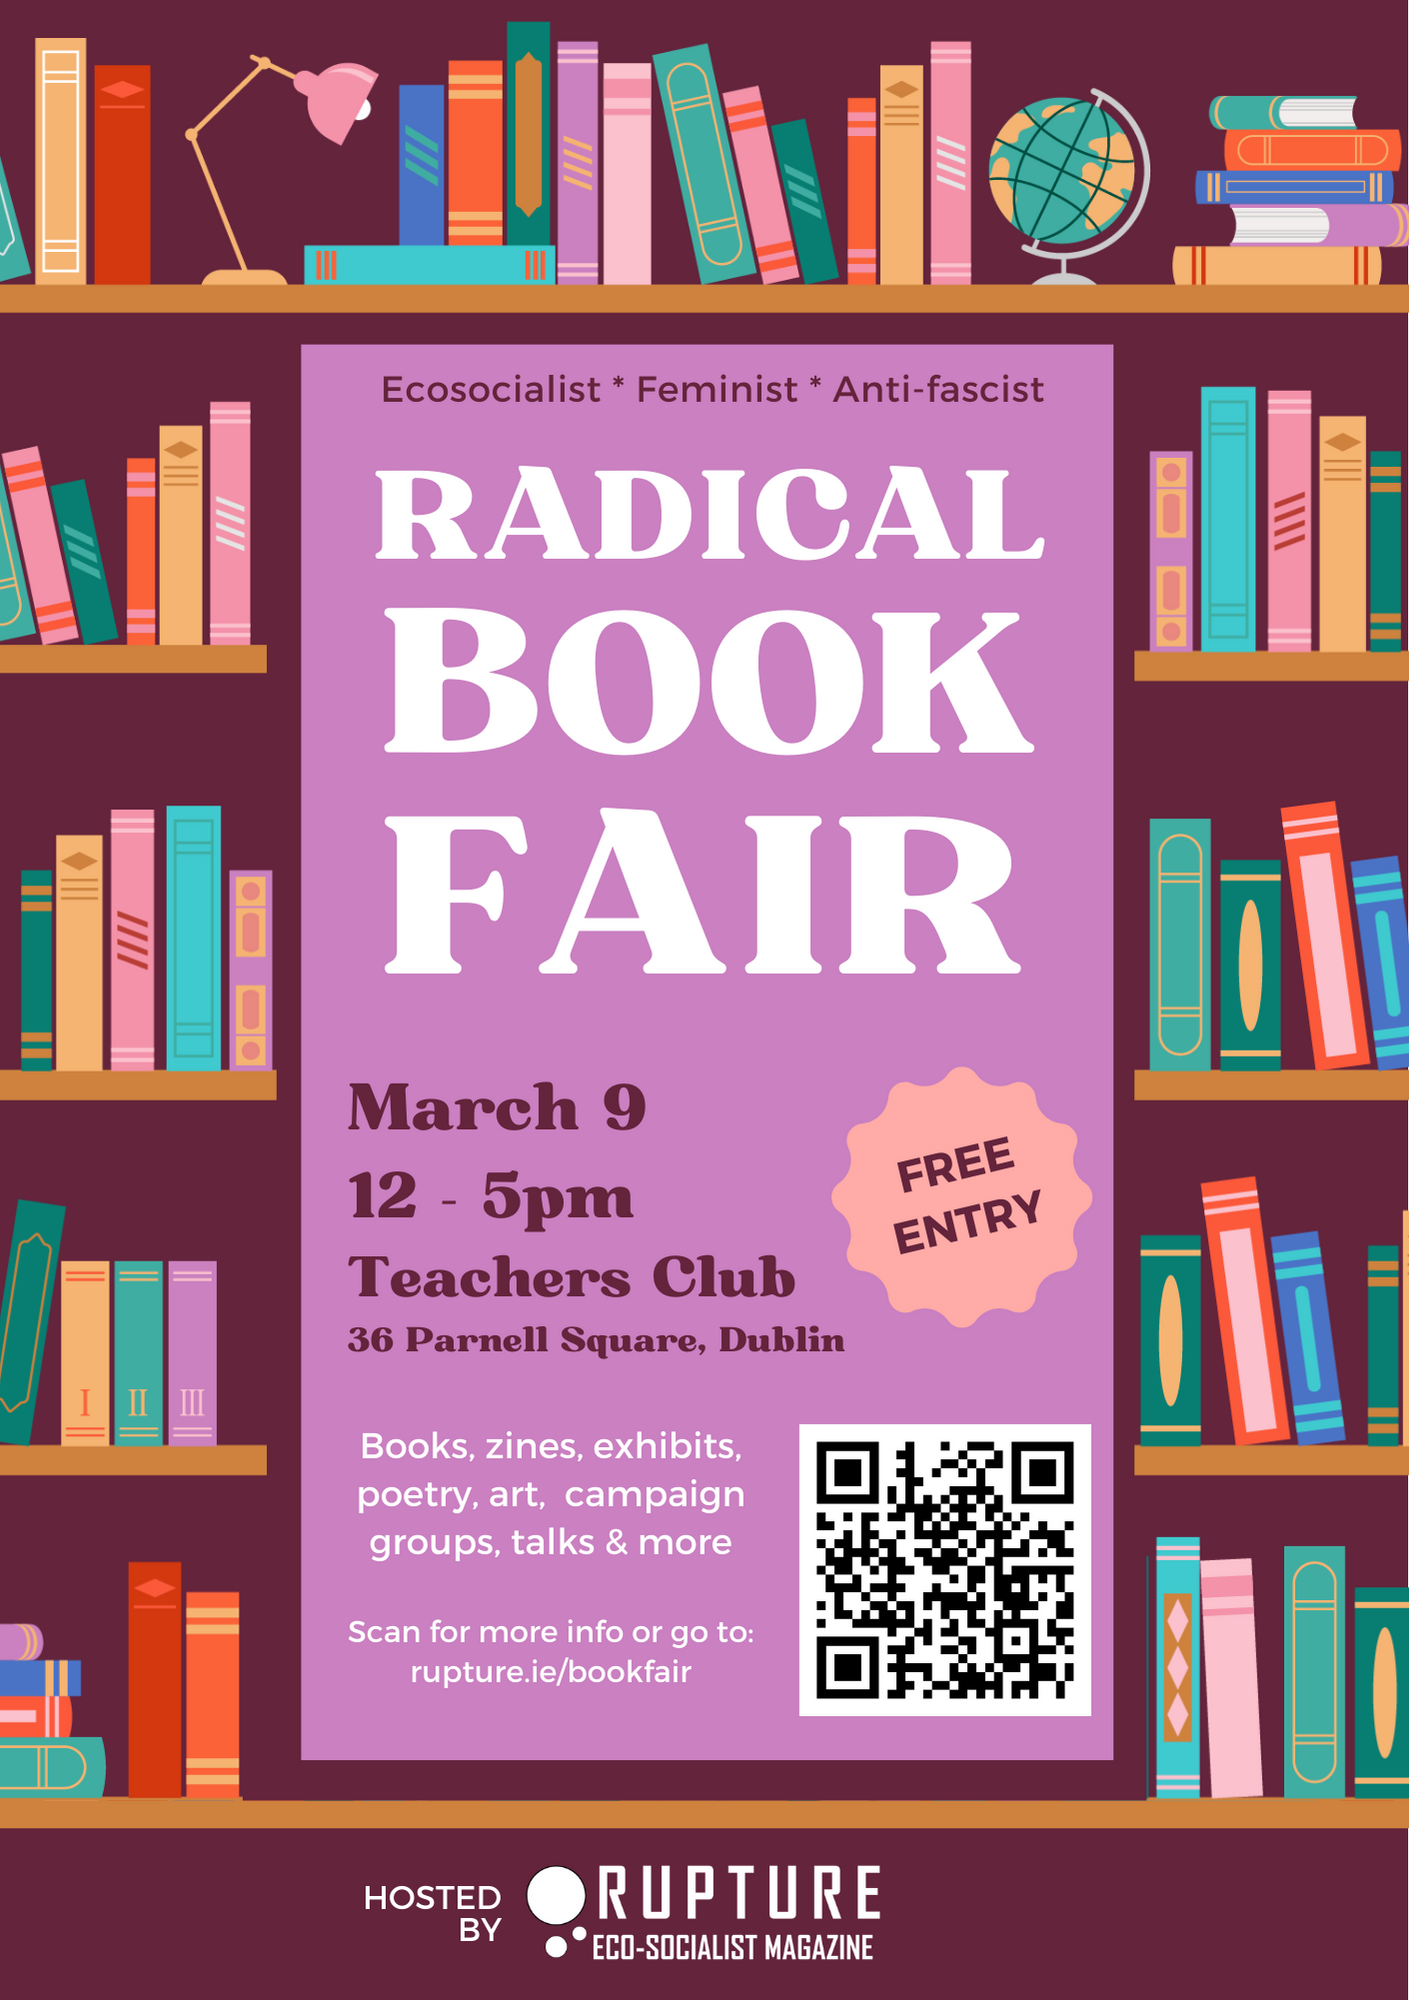 Poster for the Radical Book Fair, reading: Ecosocialist, Feminist, Anti-fascist / Radical Book Fair / March 9 12-5pm, Teacher's Club, 36 Parnell Square